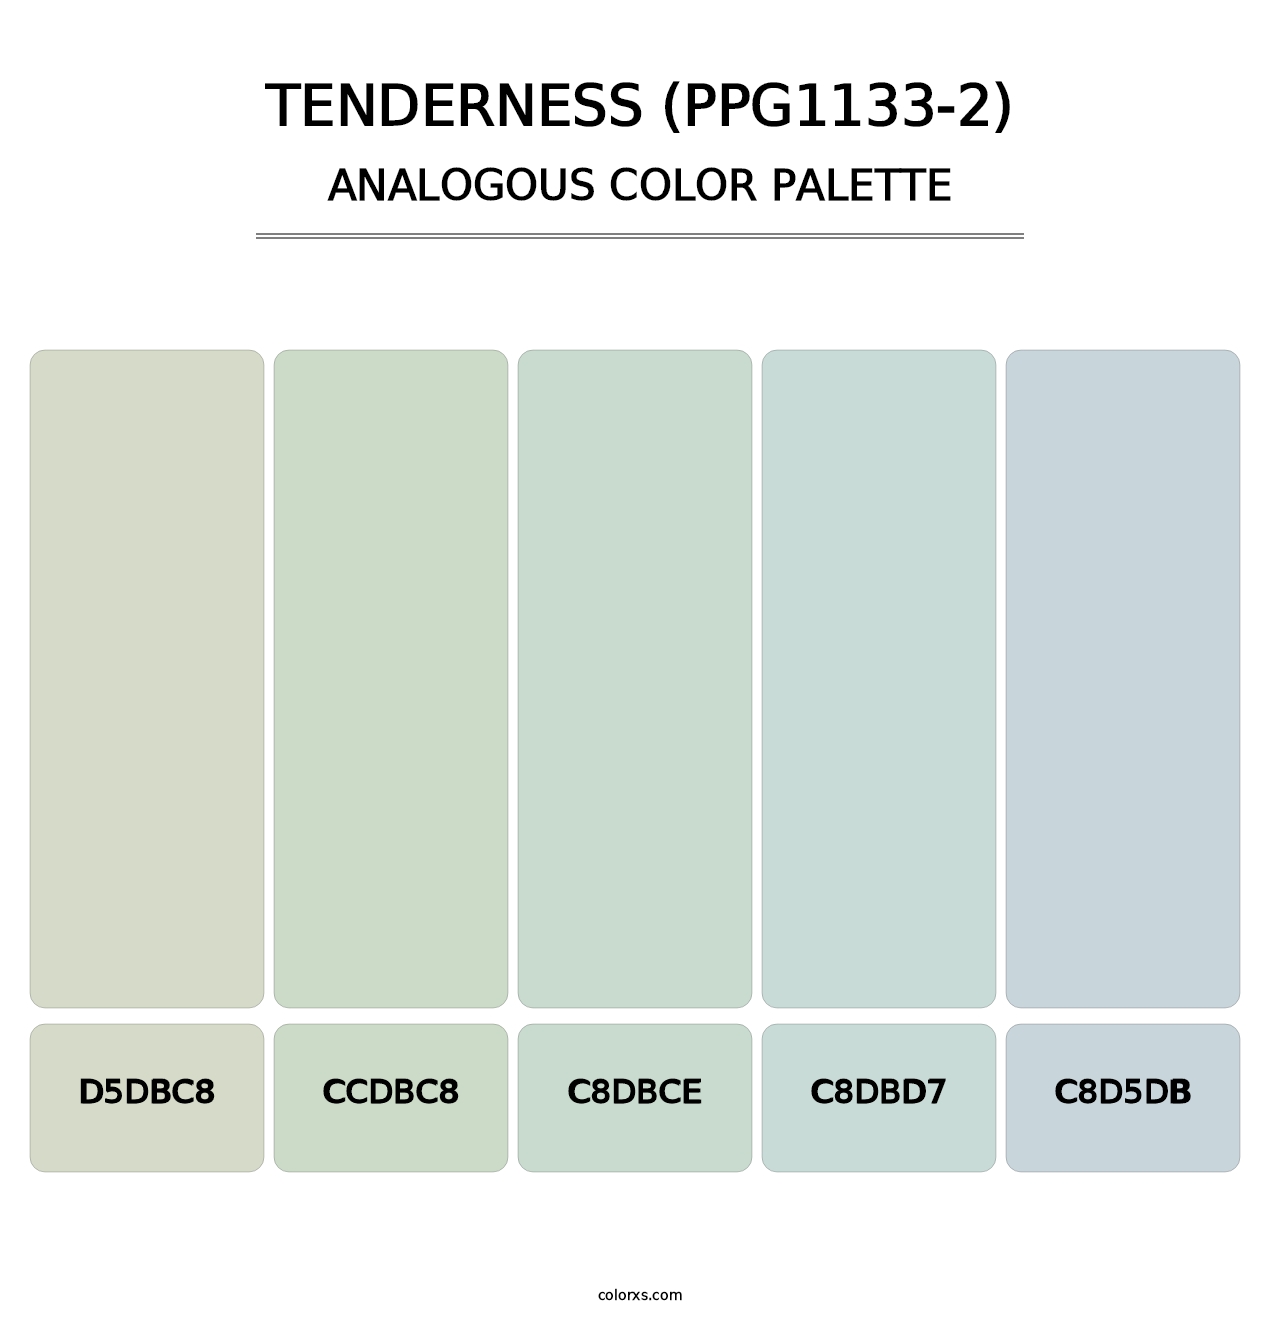 Tenderness (PPG1133-2) - Analogous Color Palette